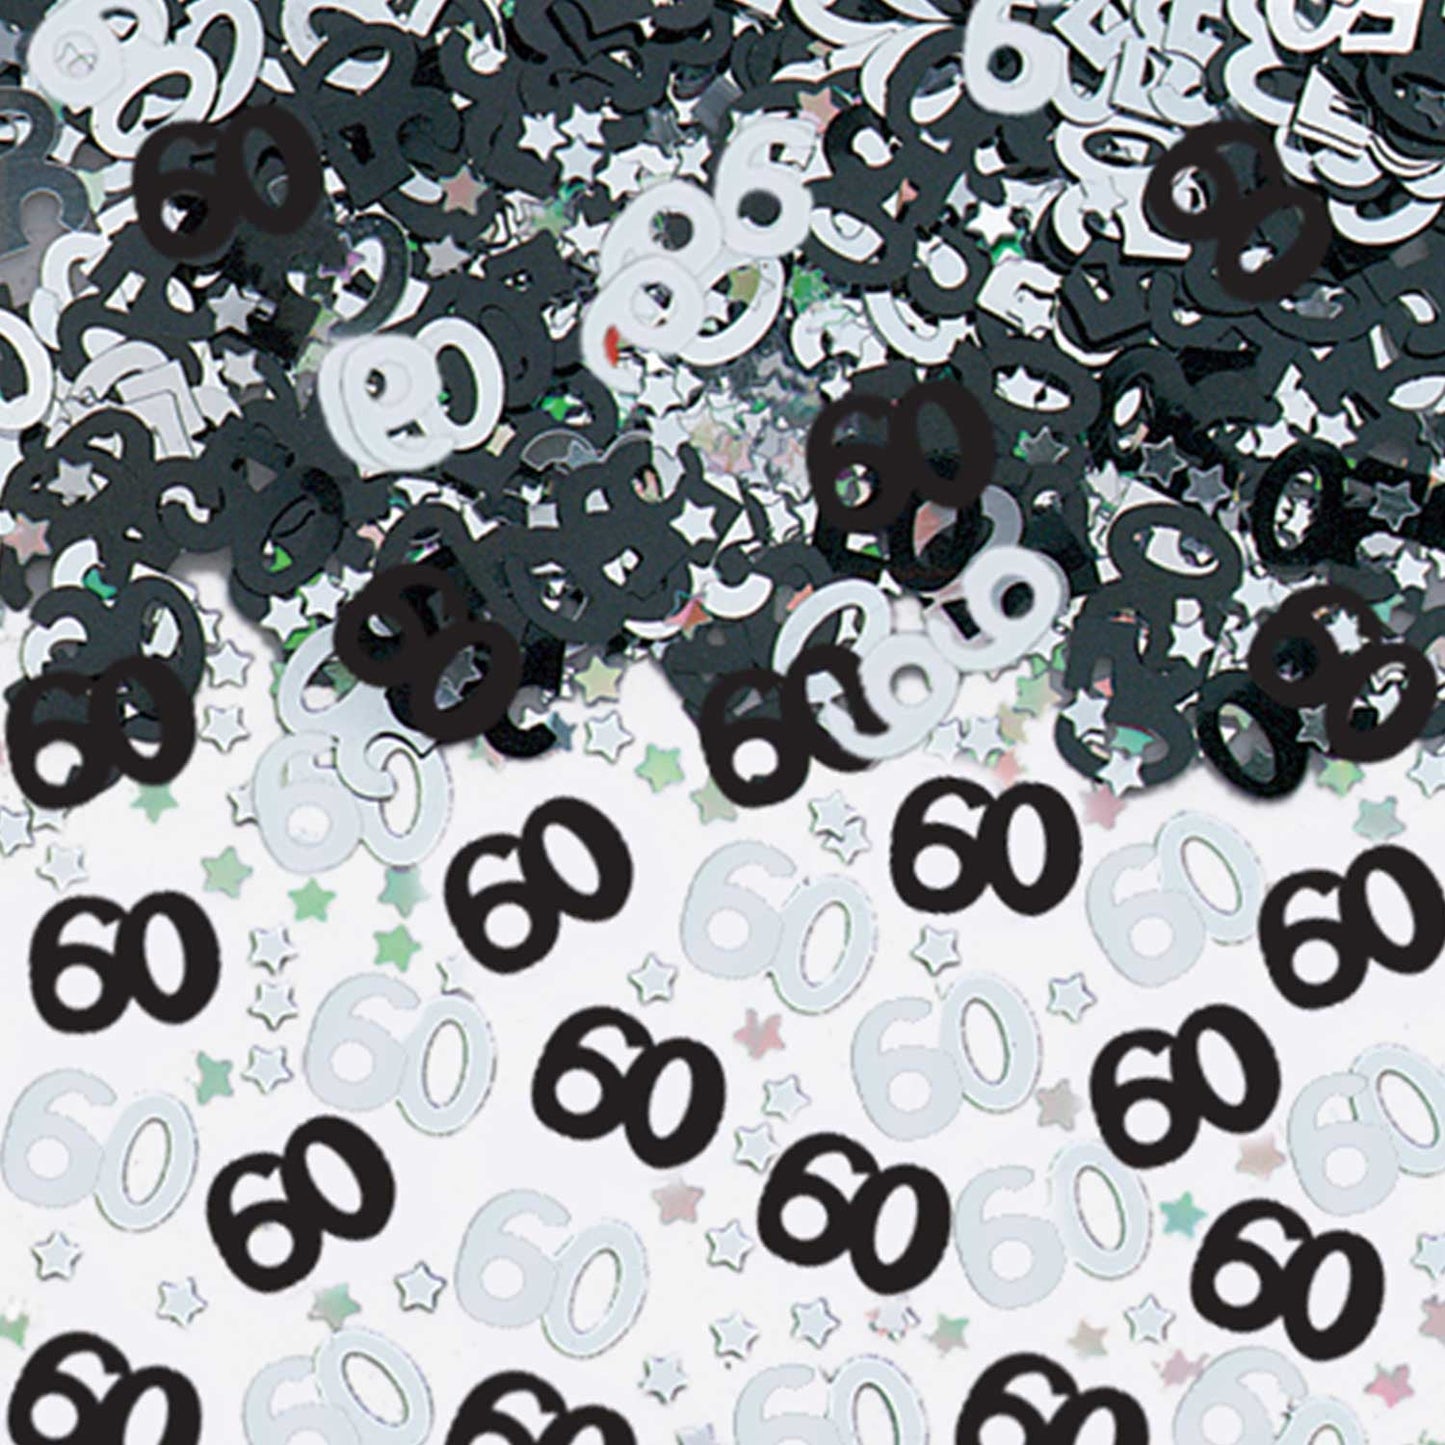 60th Birthday Black and Silver Confetti, 14g bag